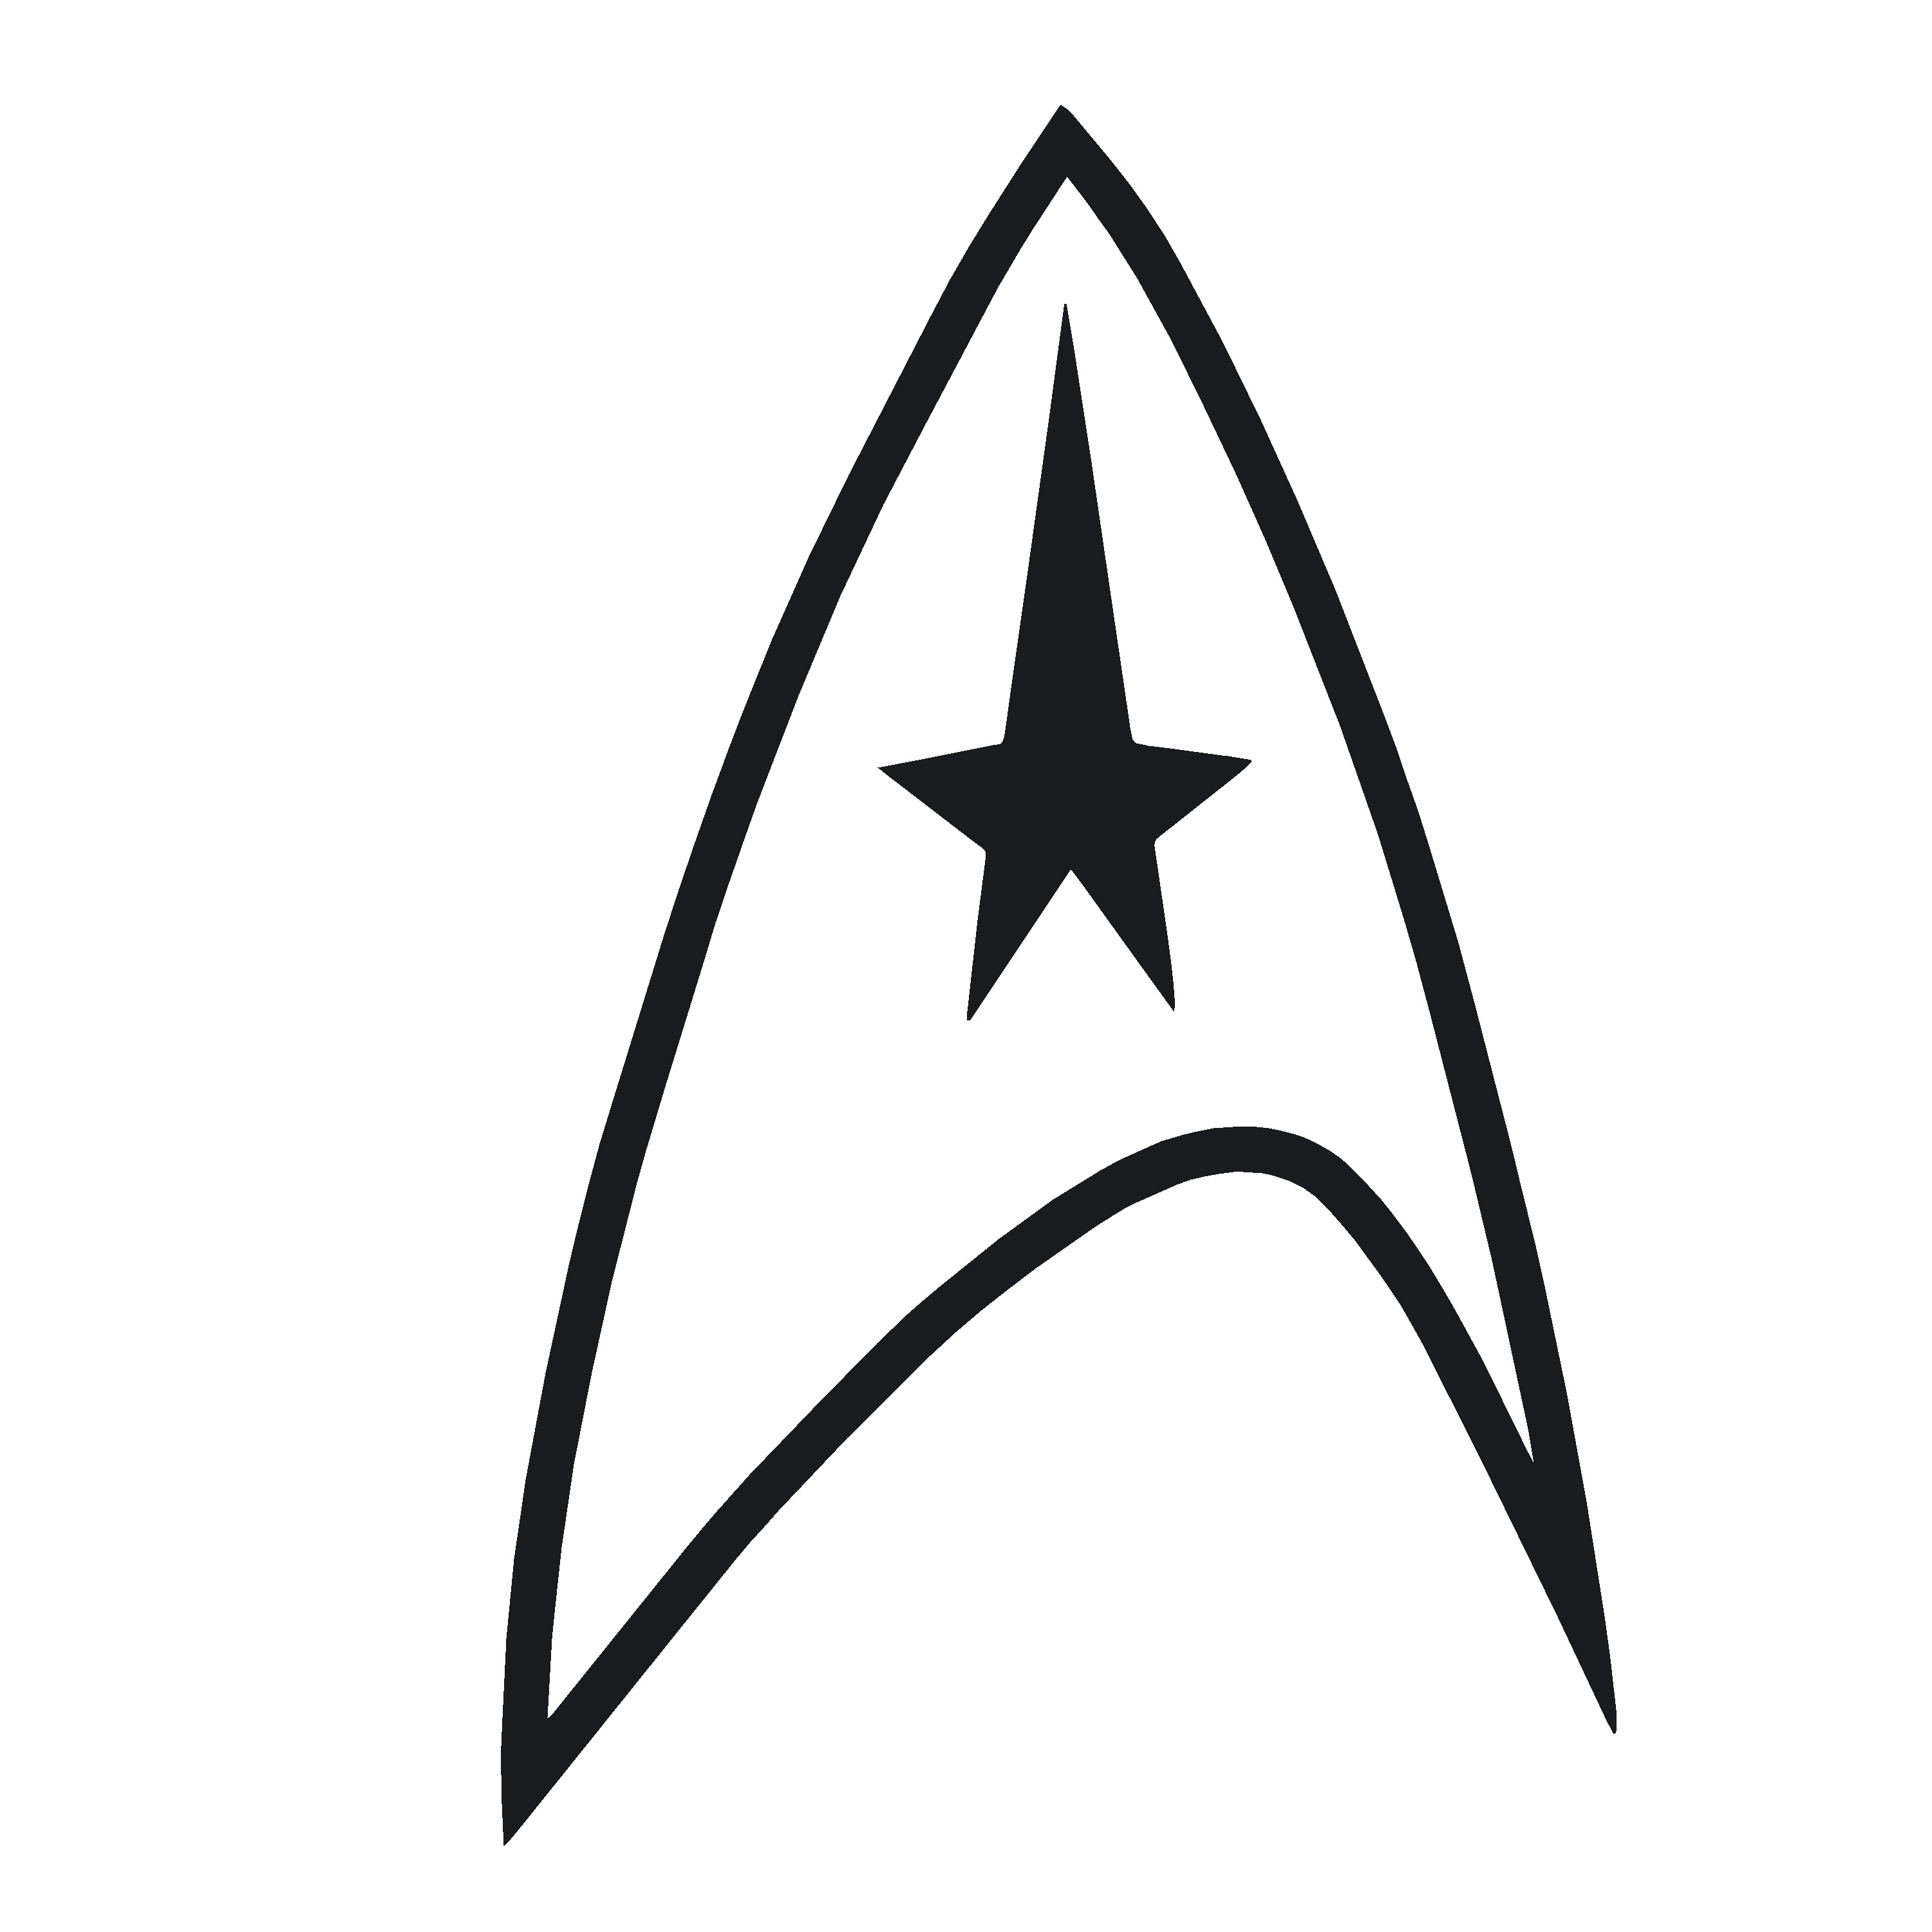 star trek logo drawing